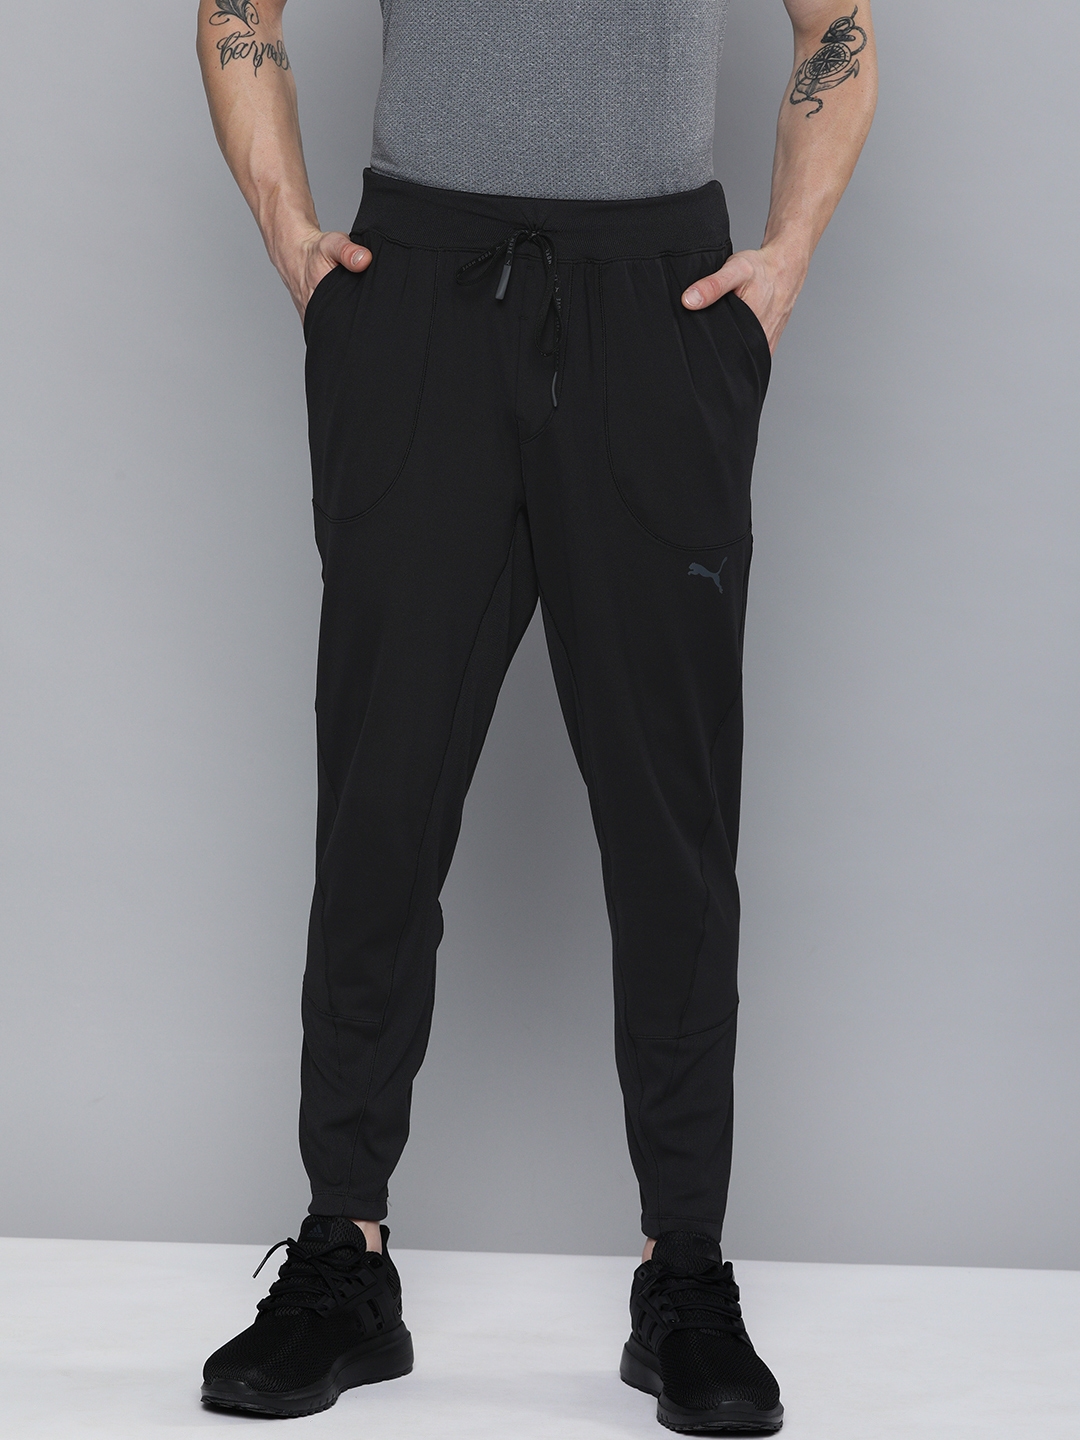 Buy PUma Men Black Solid Drycell Studio Yogini Knitted Slim Fit Yoga ...